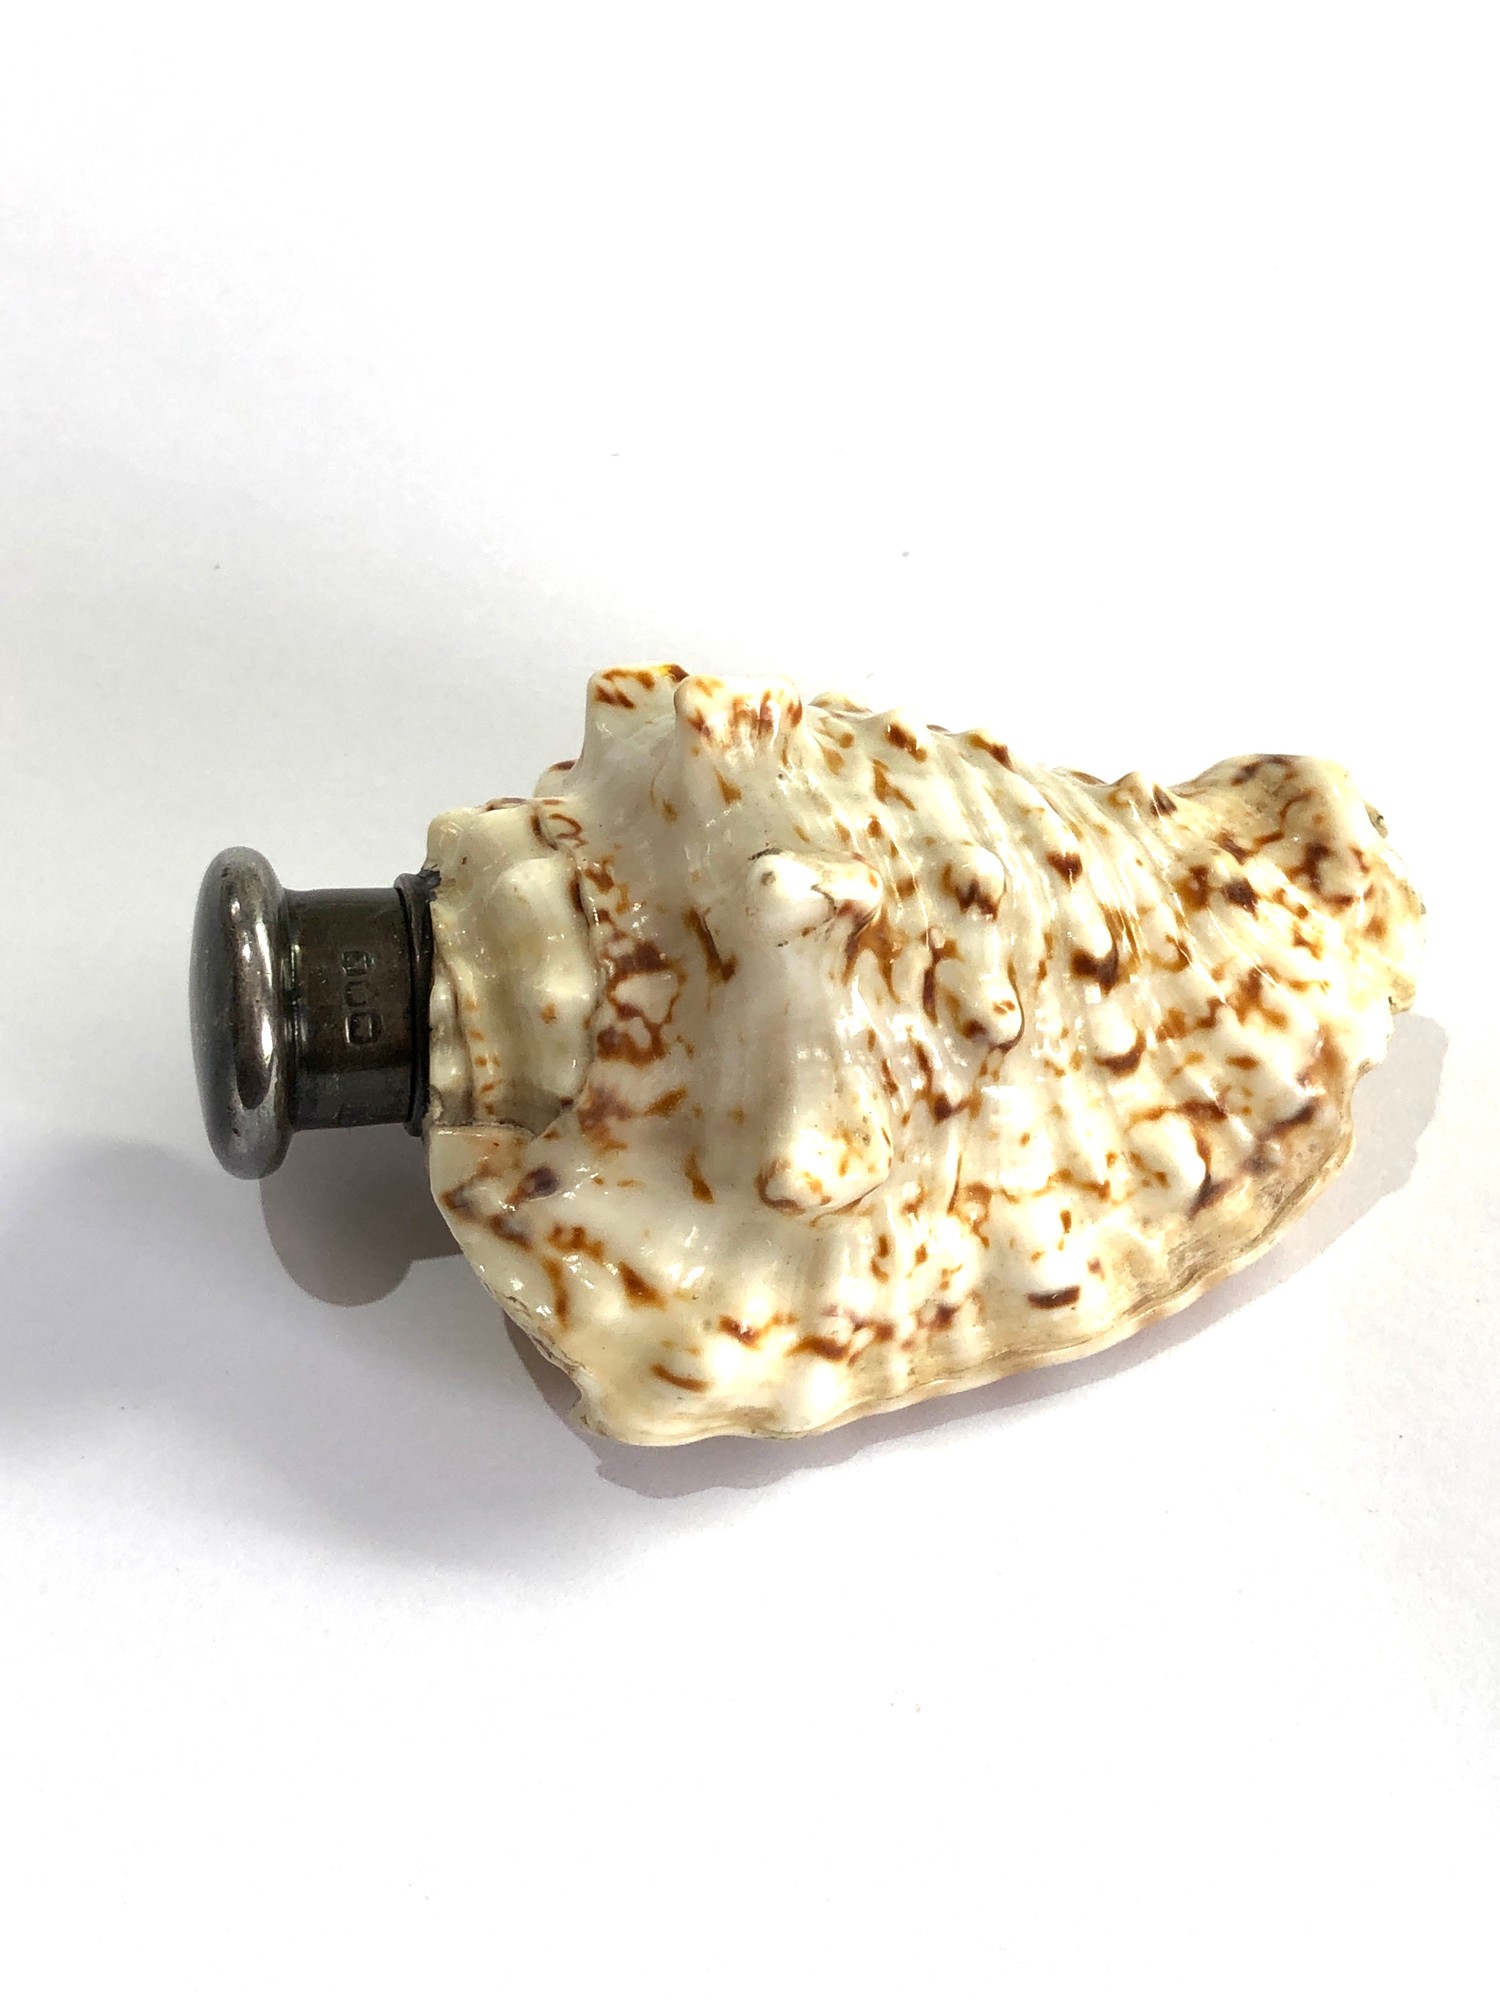 Antique samson morden silver mounted seashell scent bottle